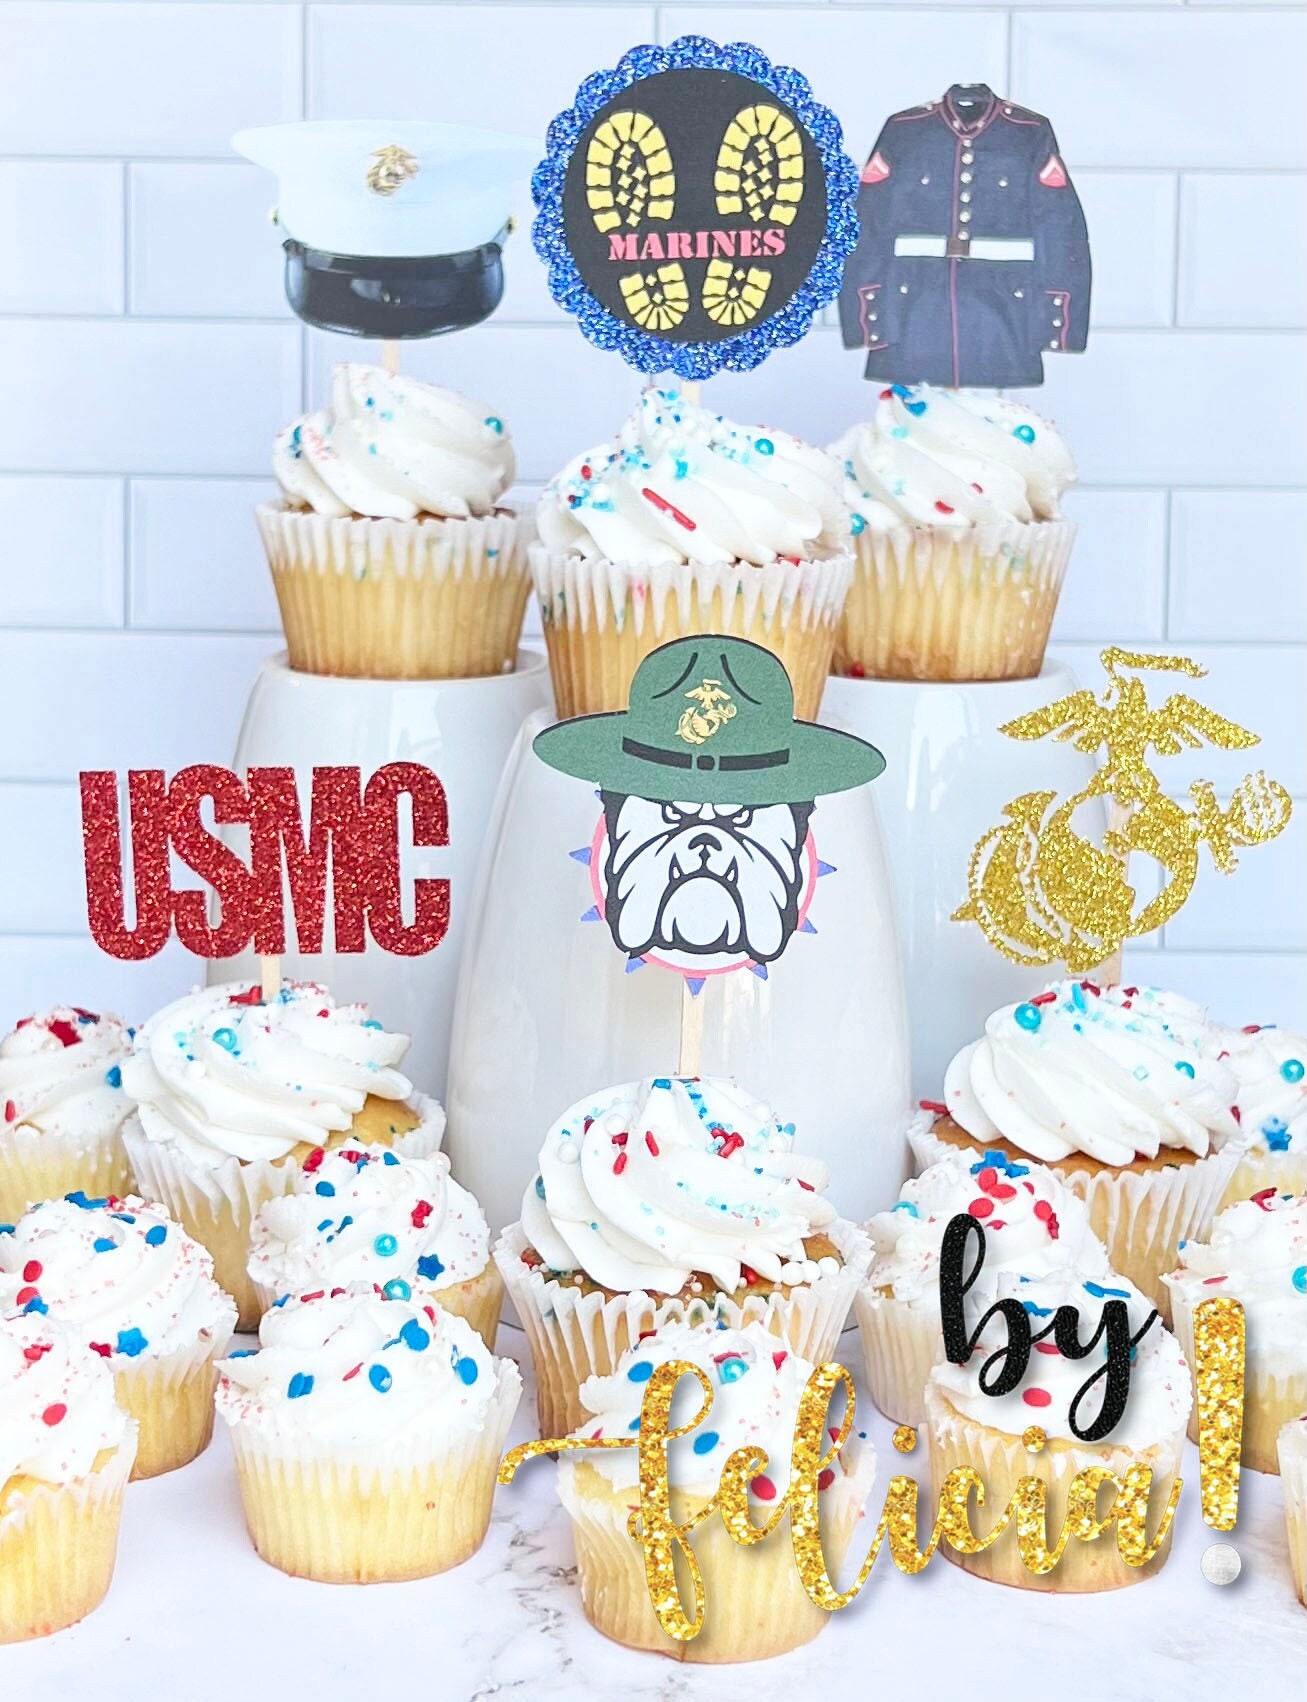 US Marine Corp - Edible Cake Topper OR Cupcake Topper, Decor